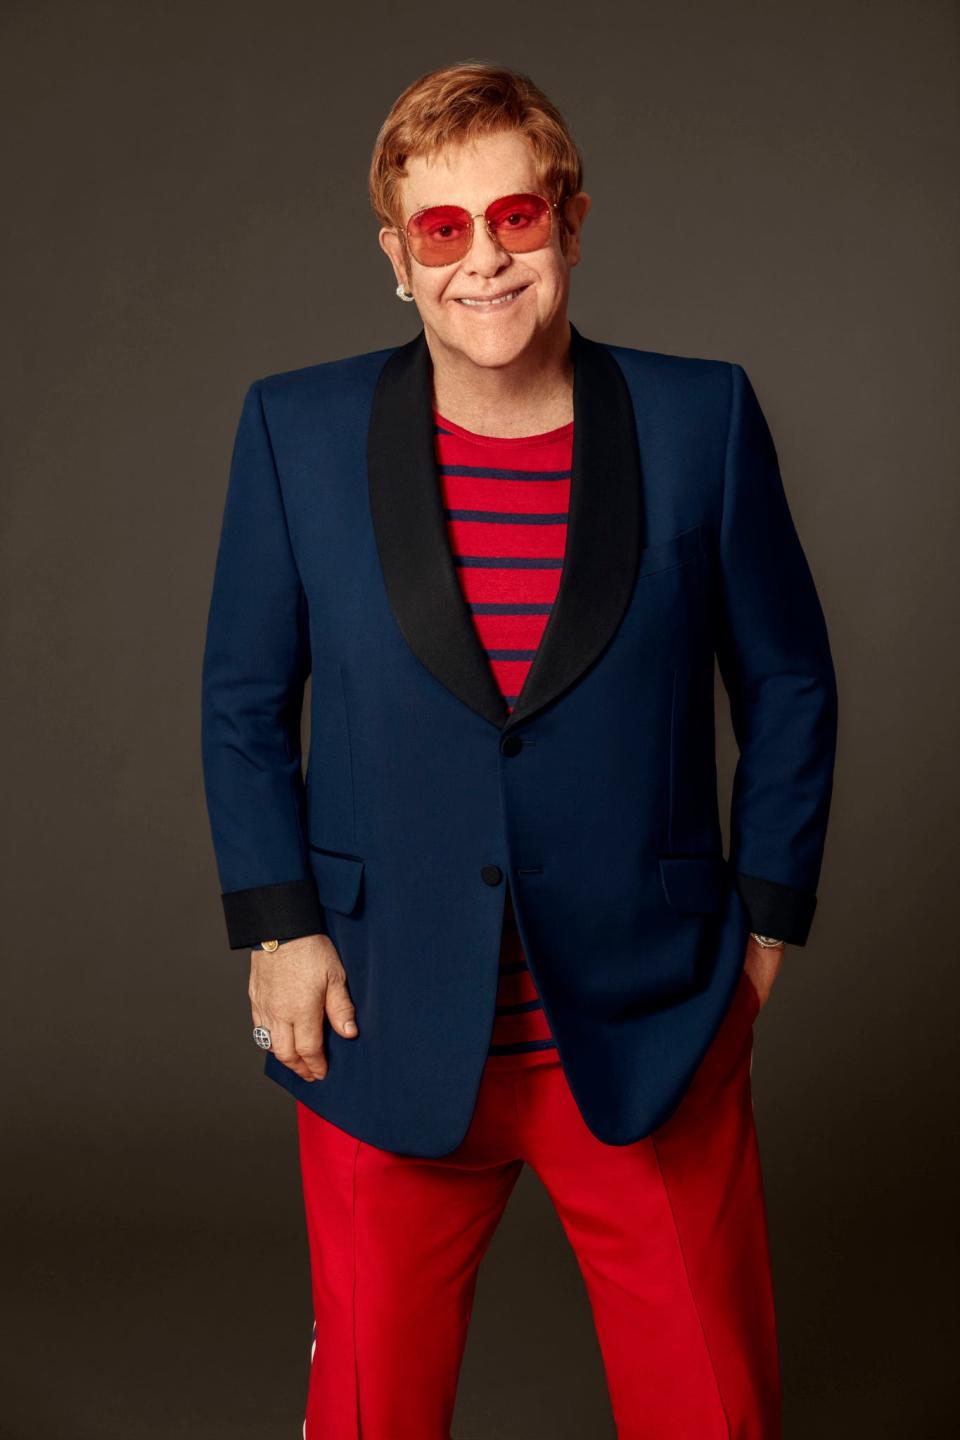 Elton John collaborated with numerous artists for "The Lockdown Sessions," including Brandi Carlile, Charlie Puth, Dua Lipa, Eddie Vedder, Gorillaz, Lil
Nas X, Miley Cyrus and Nicki Minaj.